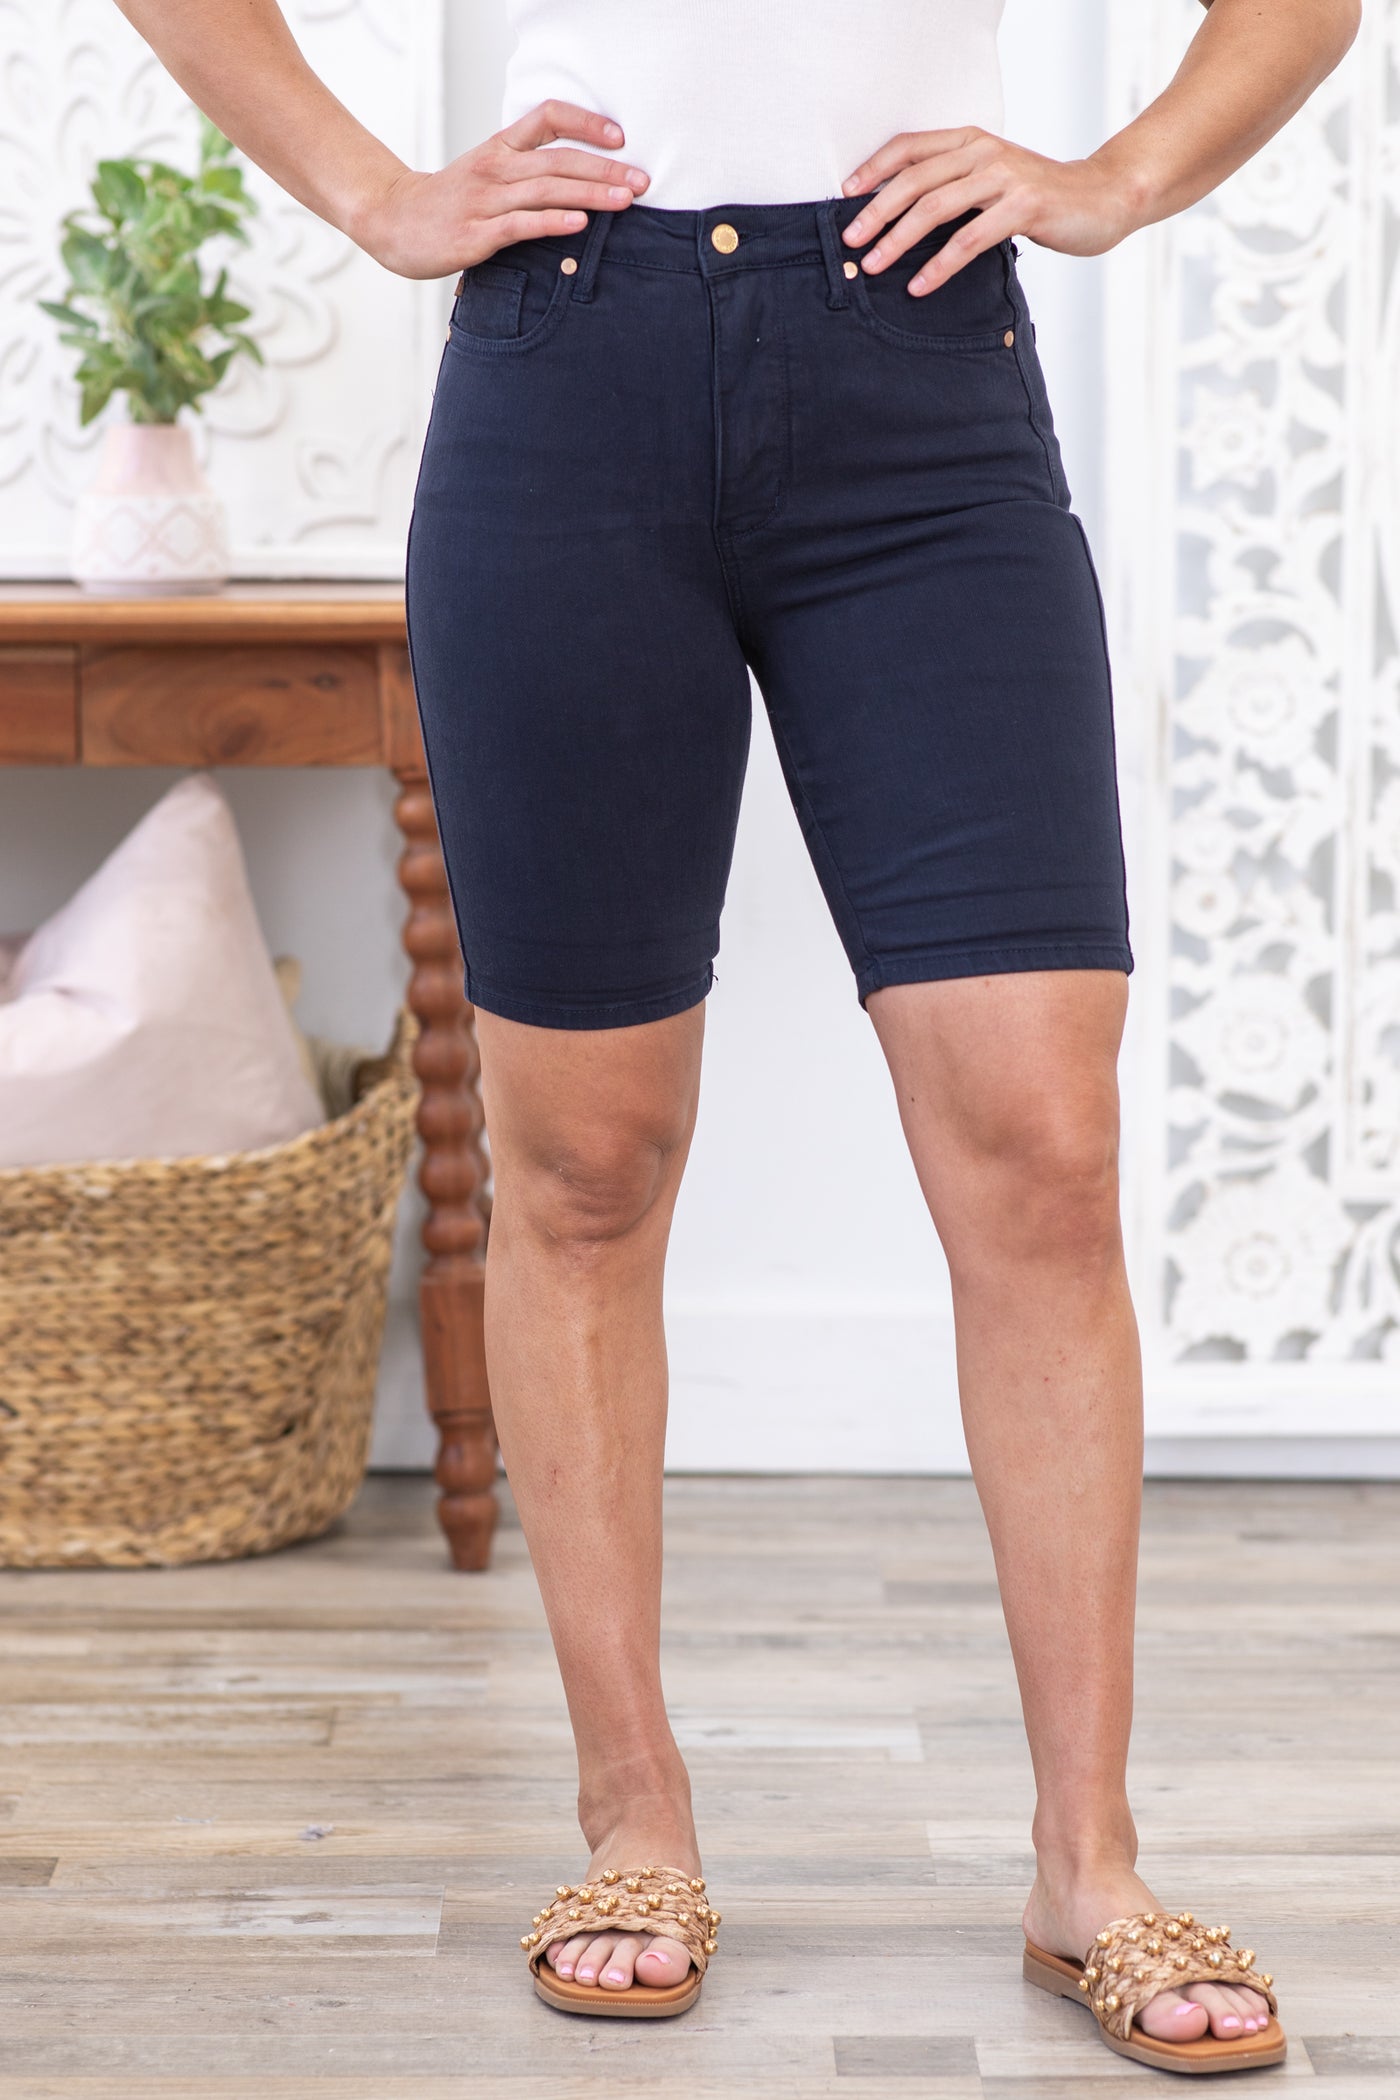 Judy Blue Navy Tummy Control Bermuda Shorts · Filly Flair